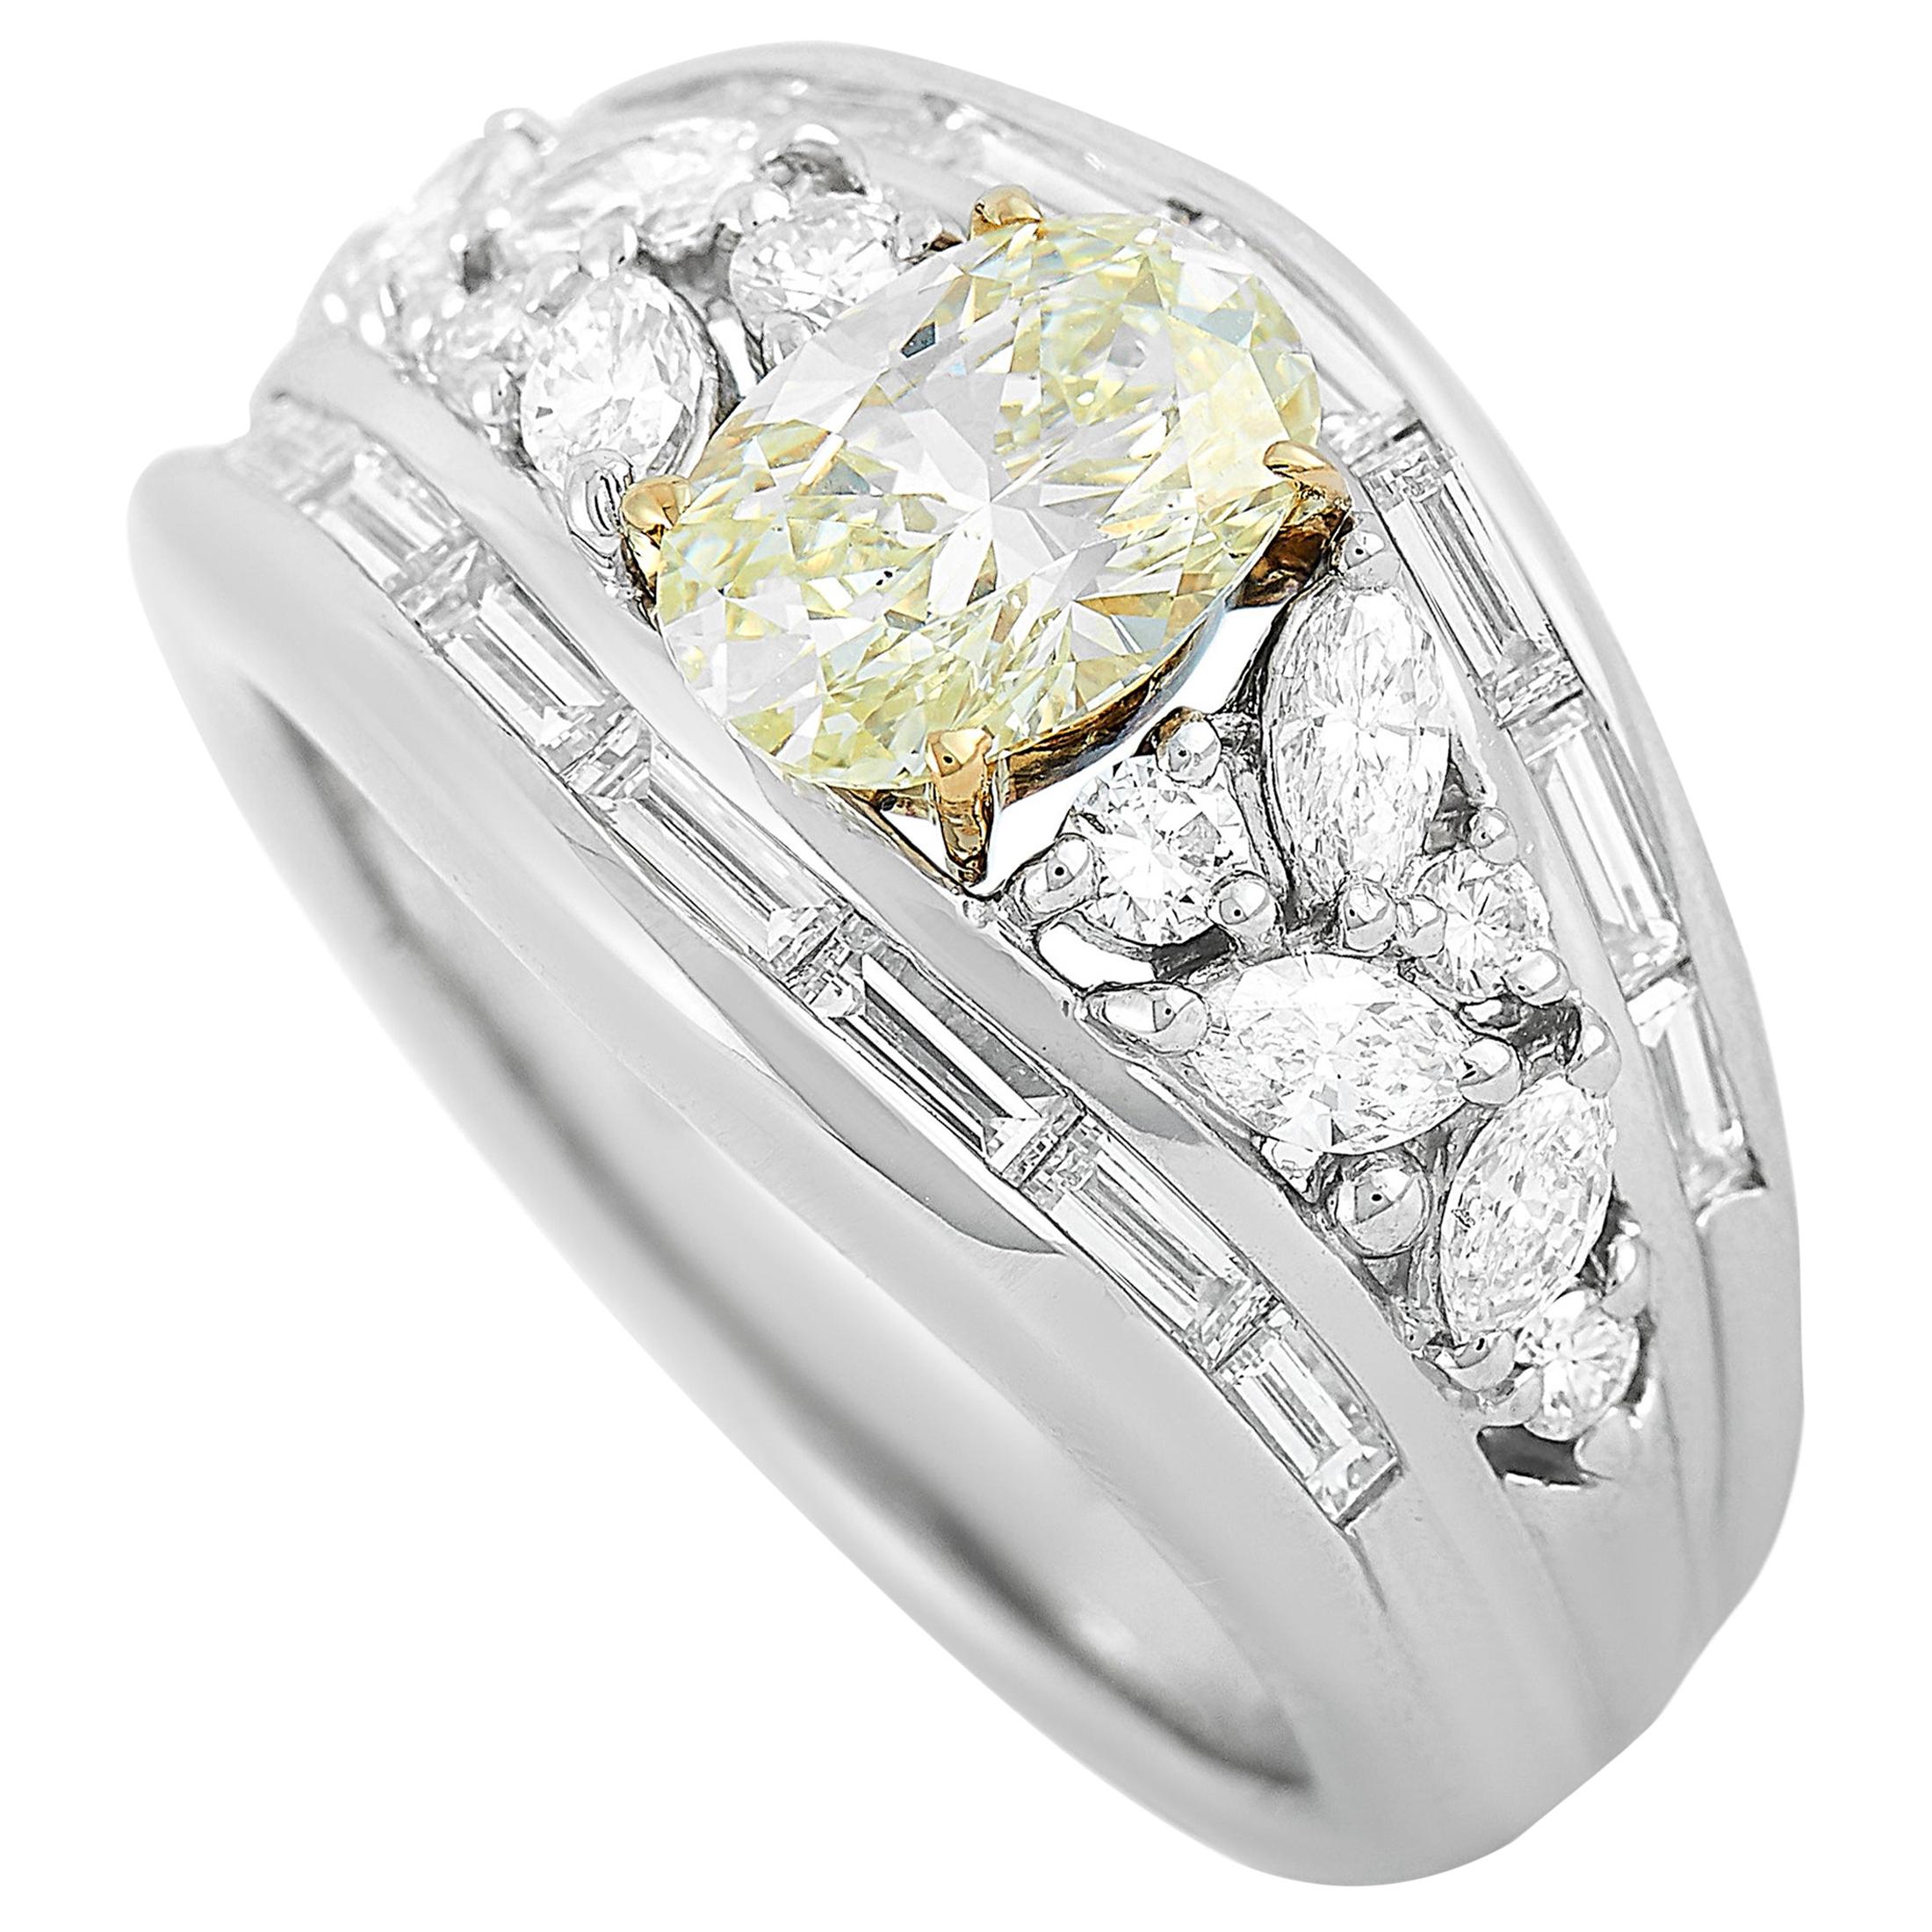 LB Exclusive Platinum and 18 Karat White Gold 2.44 Carat Diamond Ring